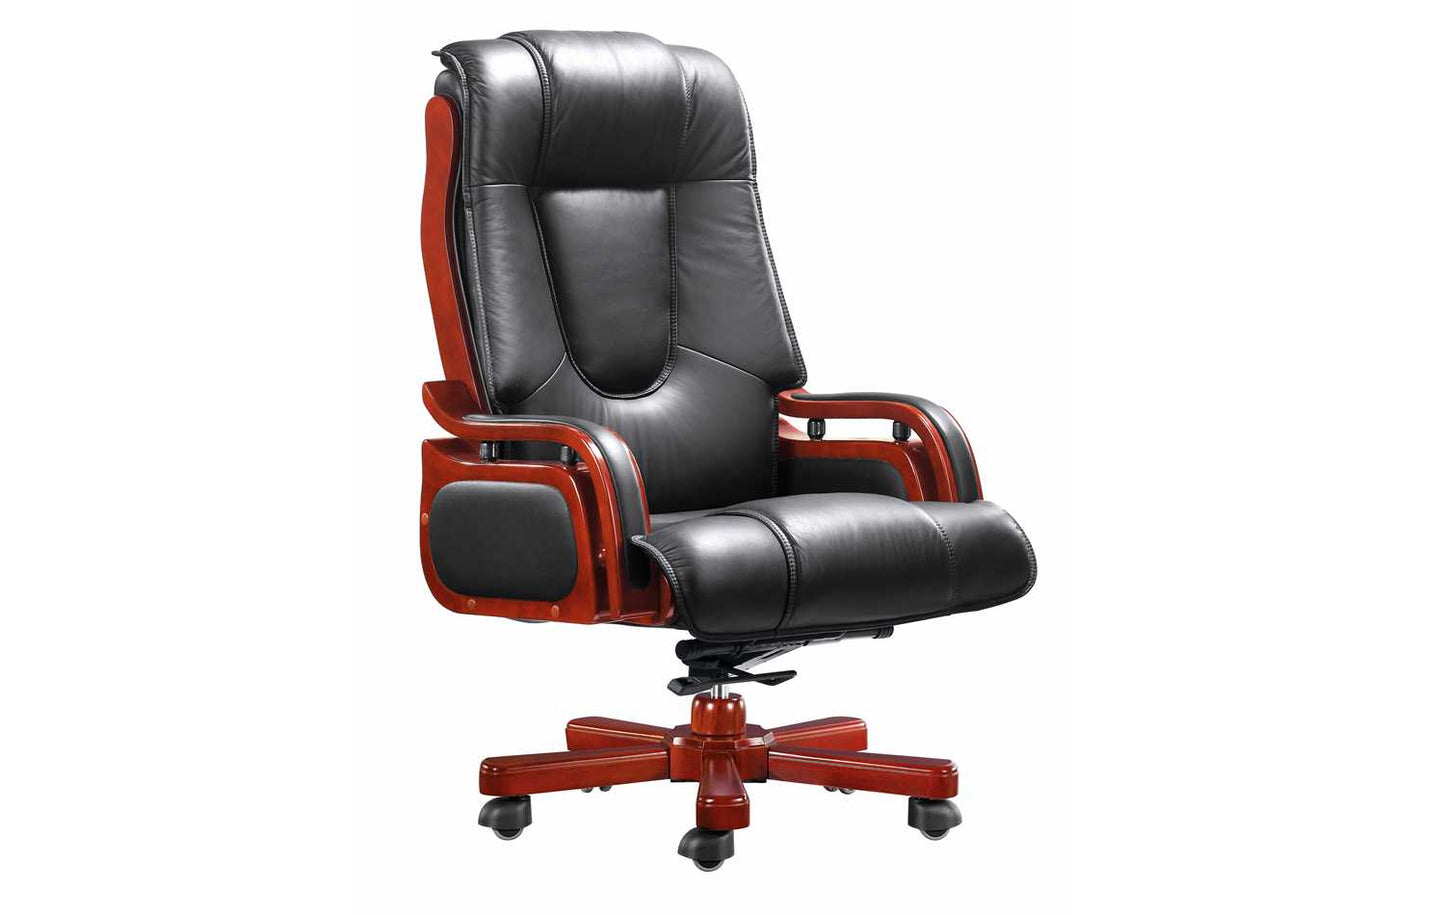 DB010 Executive High Back Chair